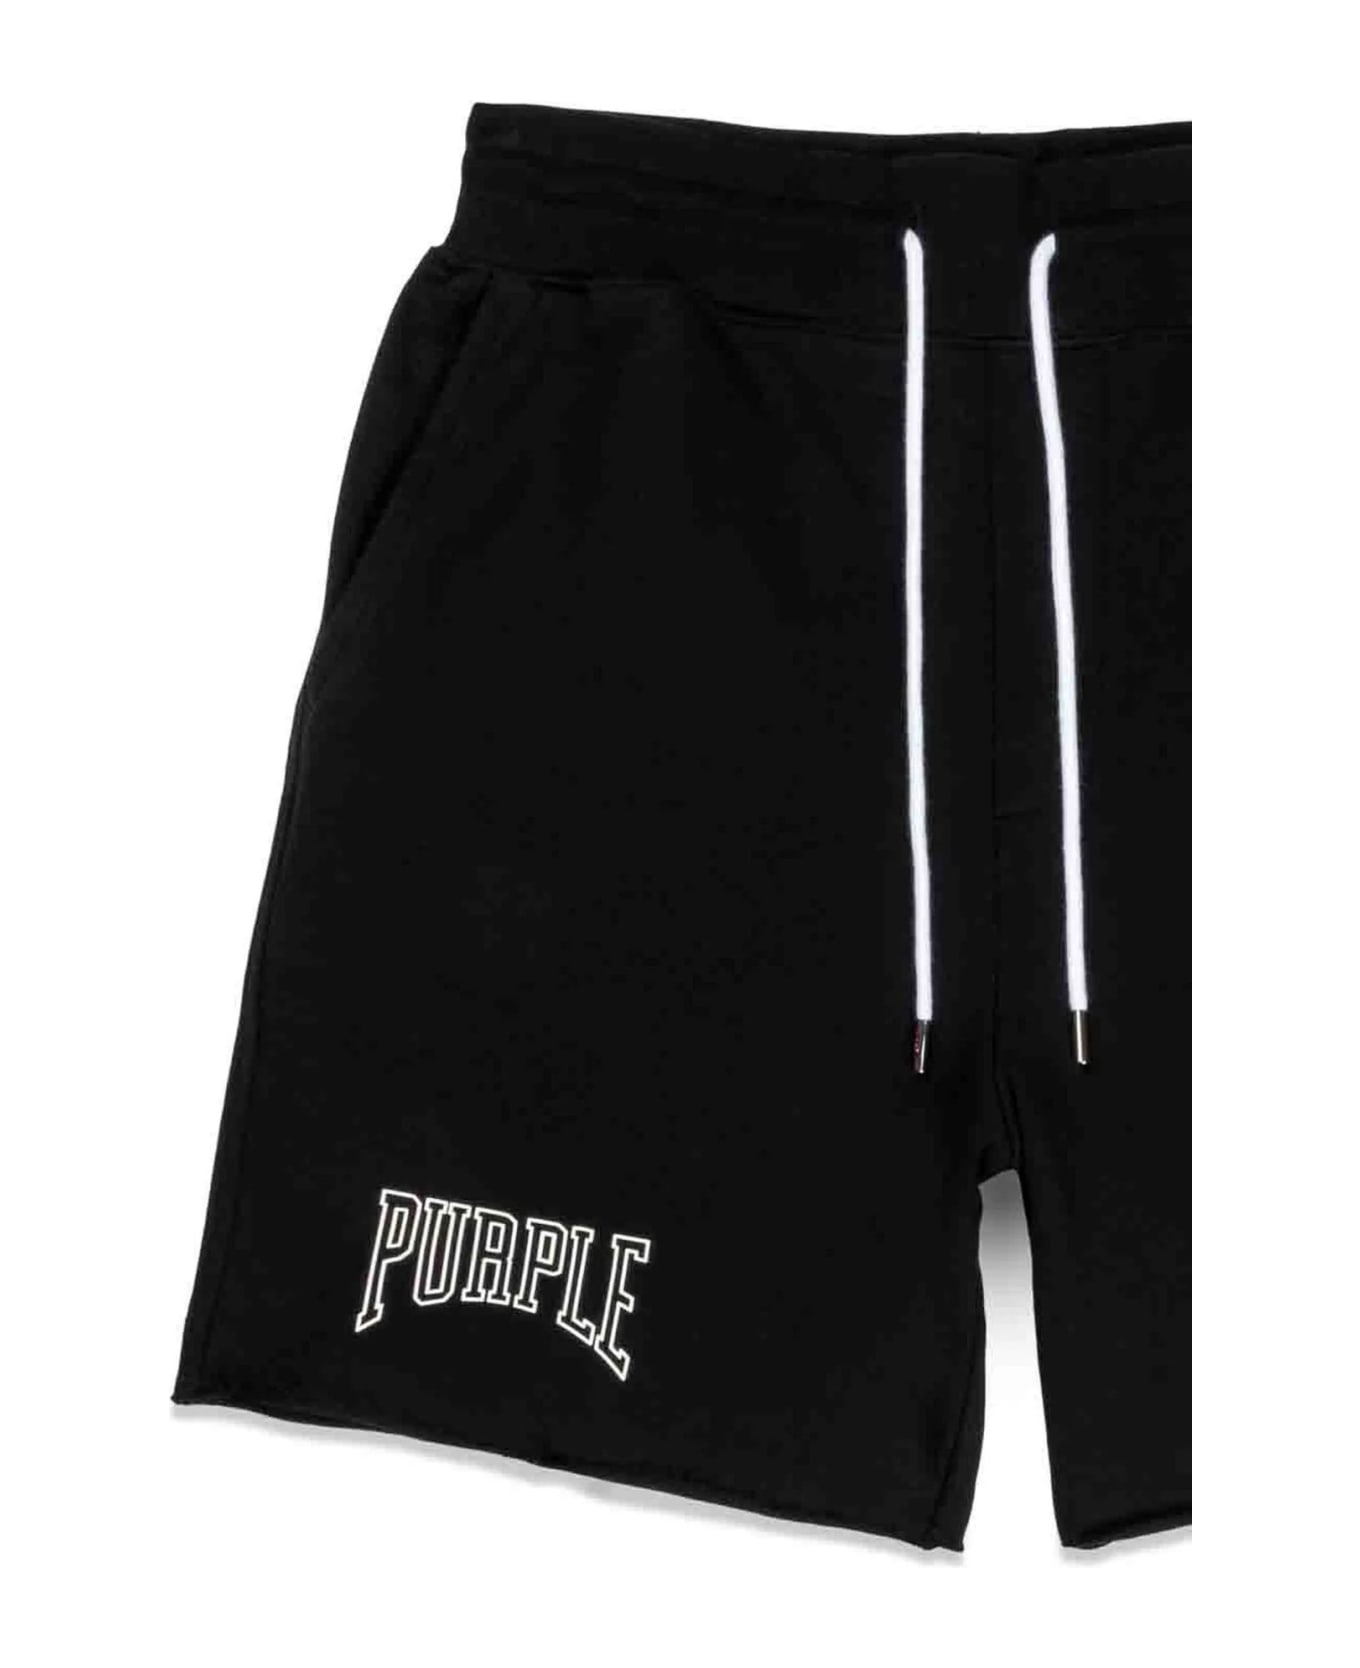 Purple Brand Shorts Black - Black